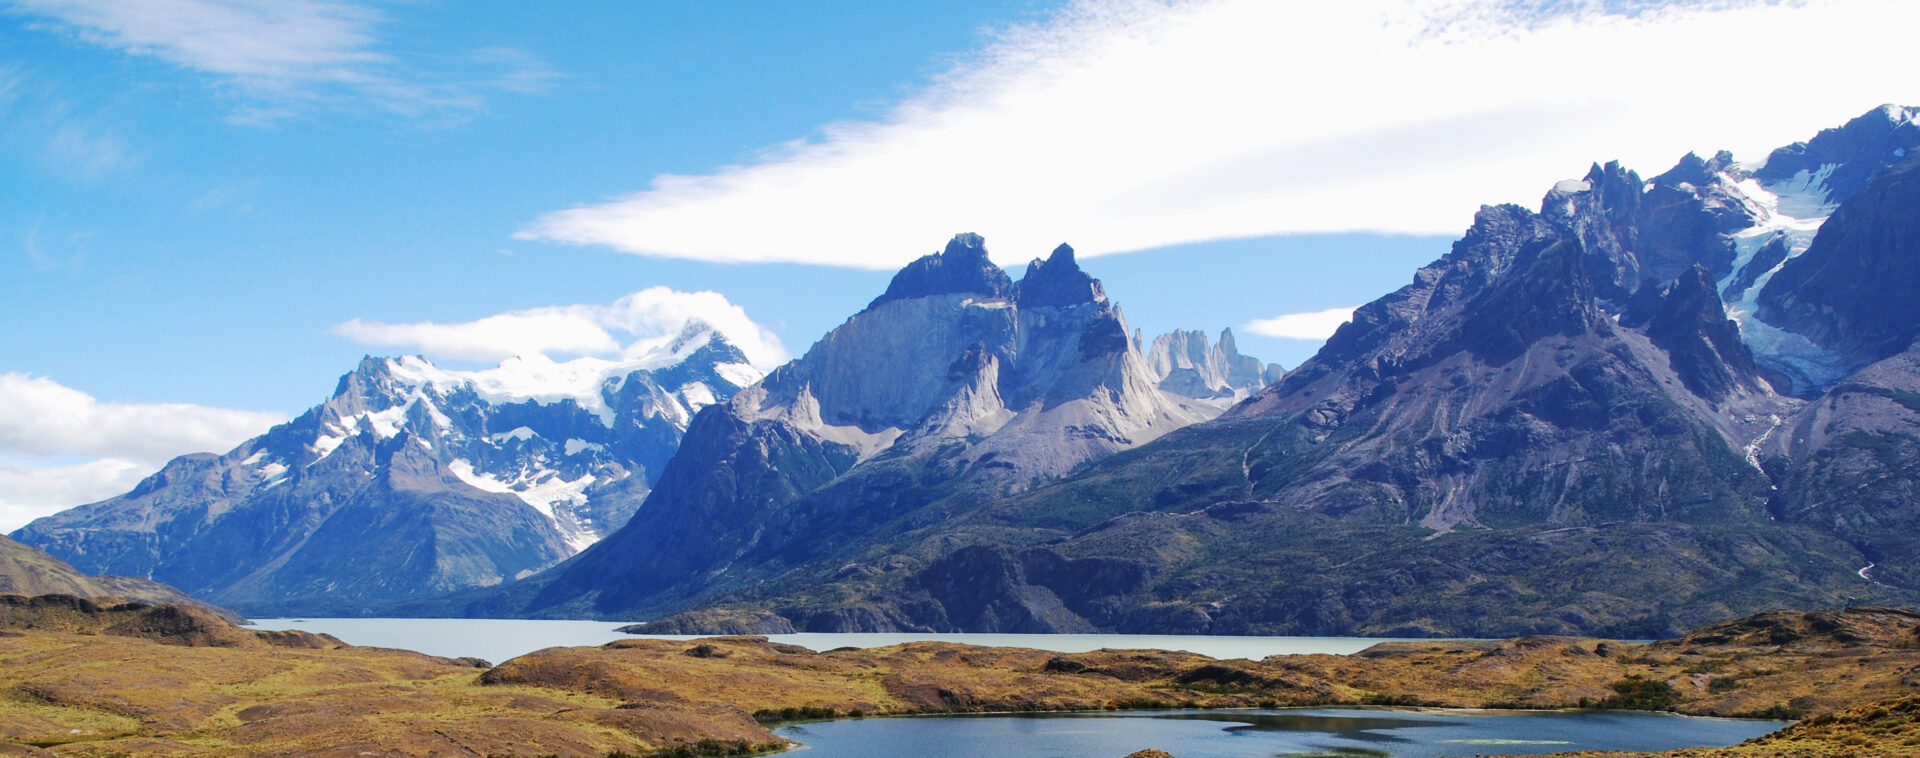 Patagonien chile cerro torre ueli arnold montanara bergerlebnisse